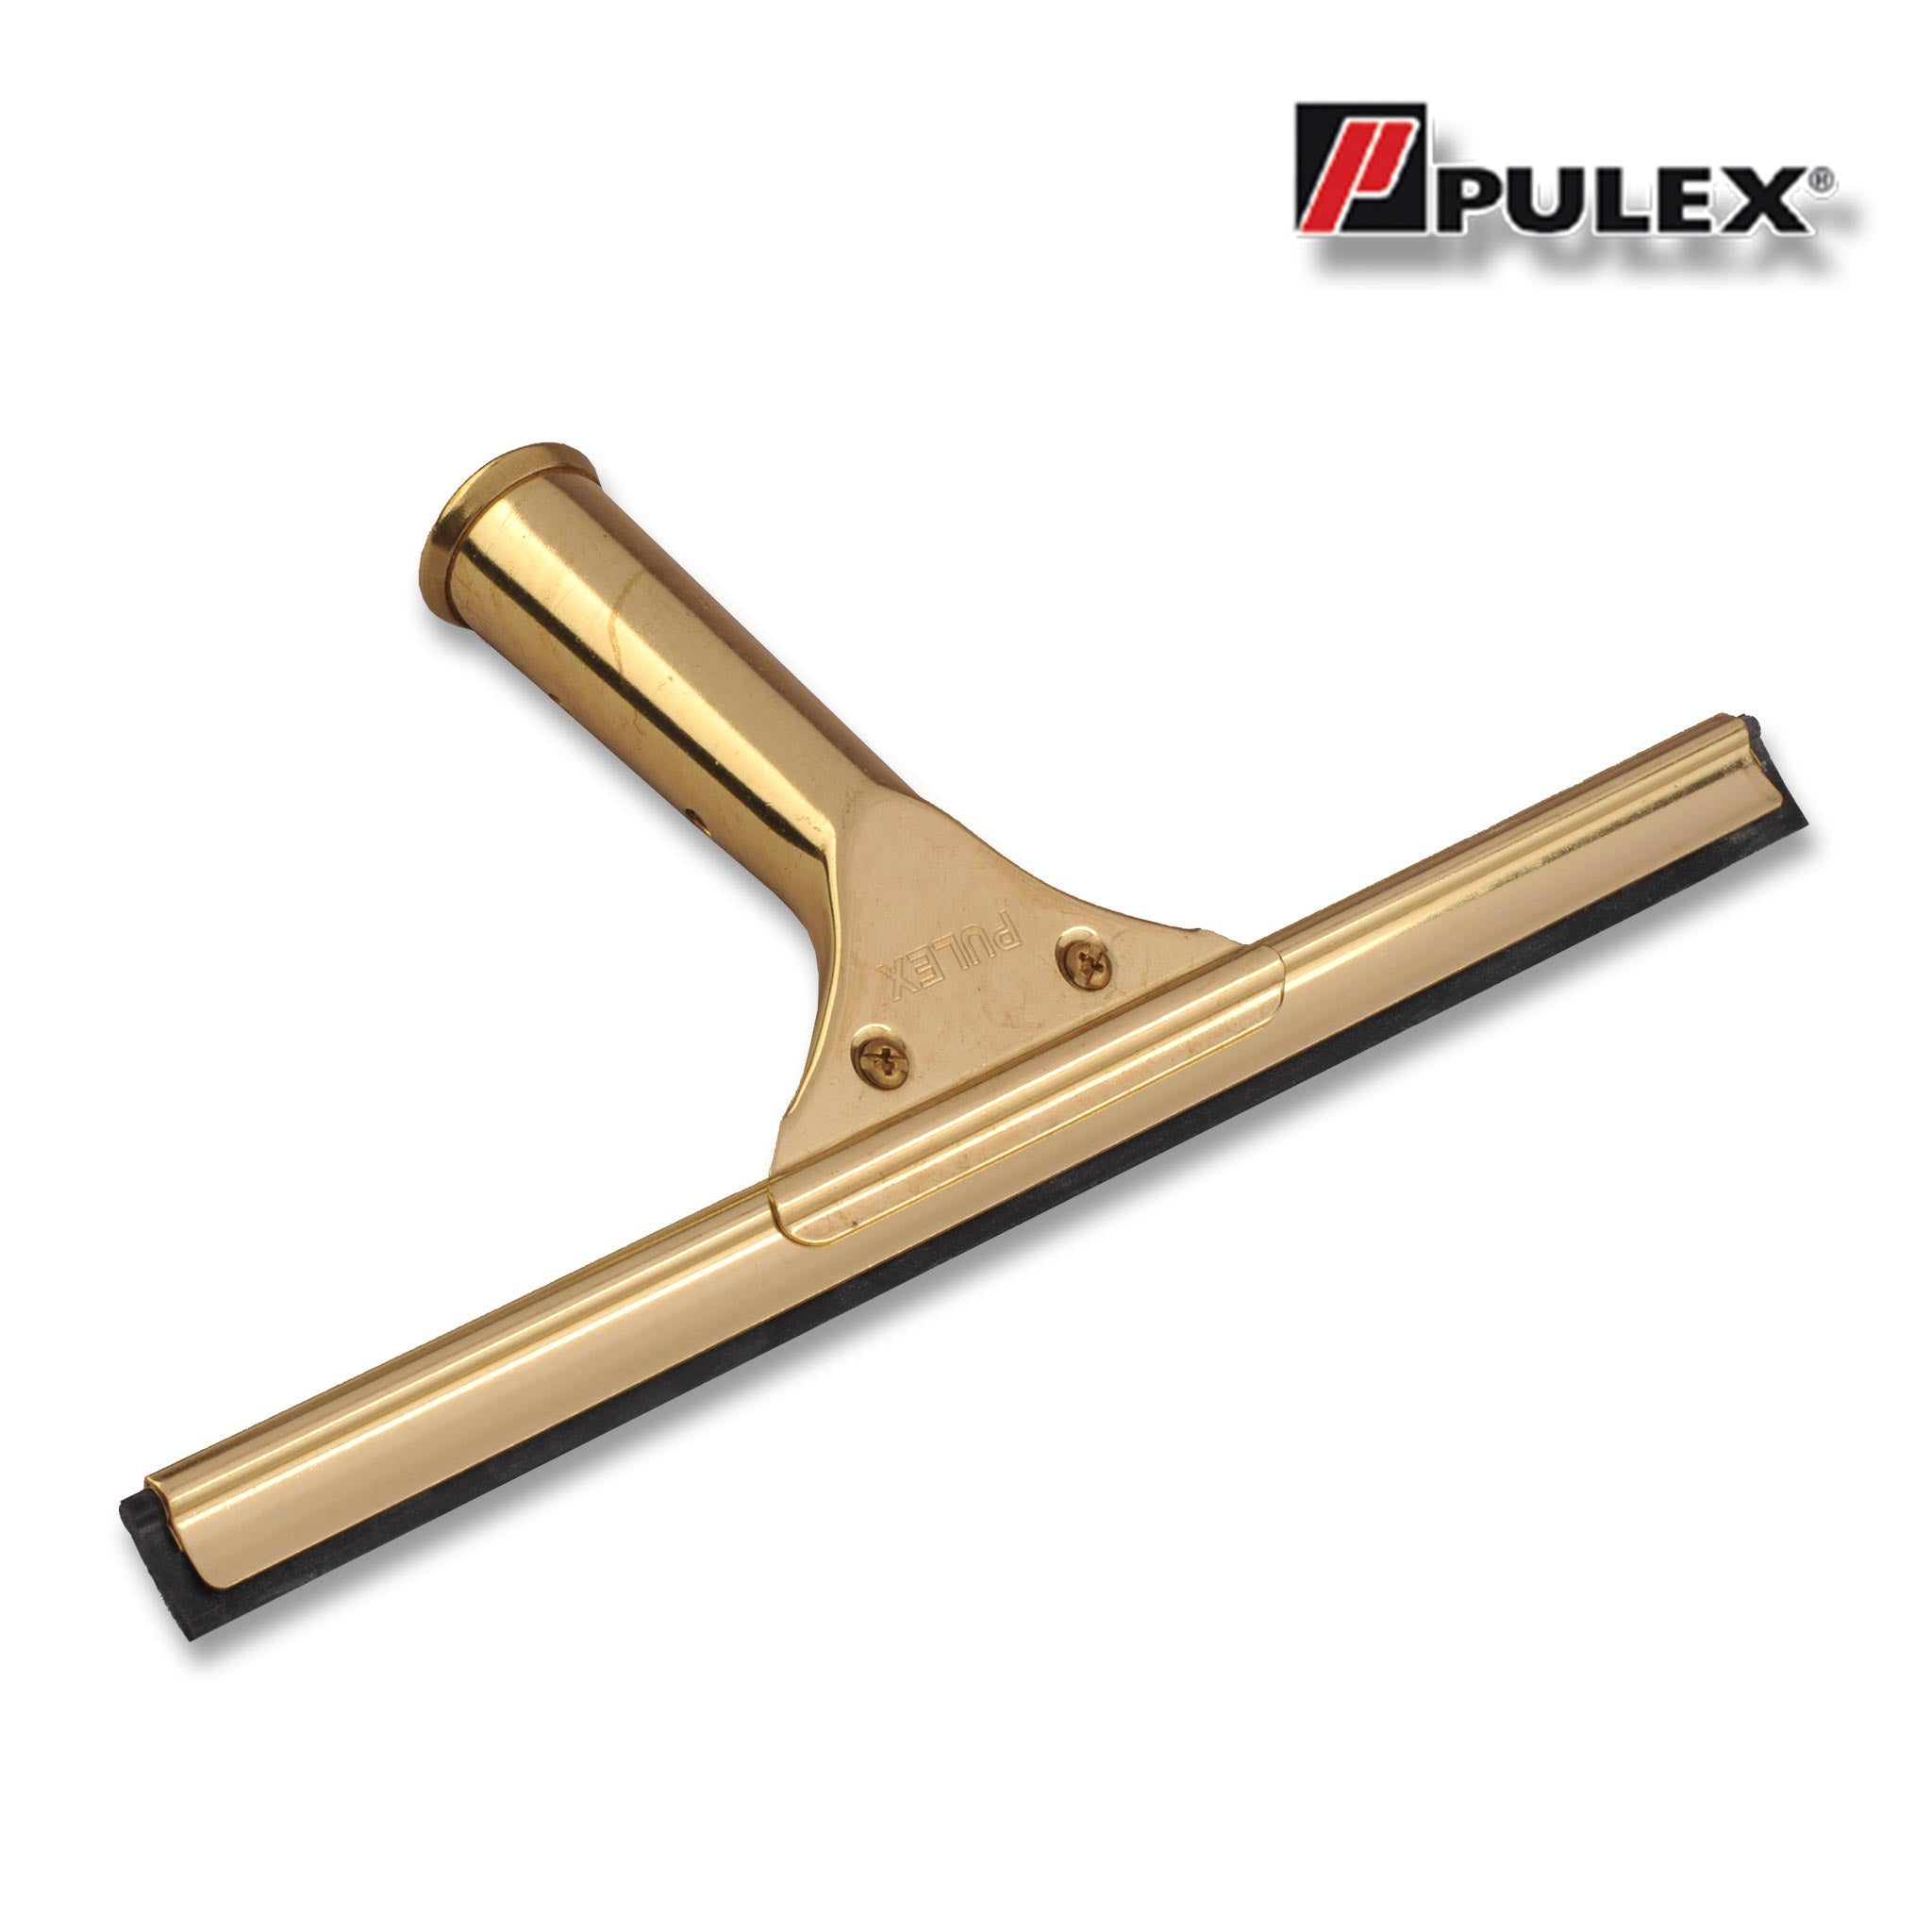 Pulex Brass Window Squeegee: Classic Traditional Design